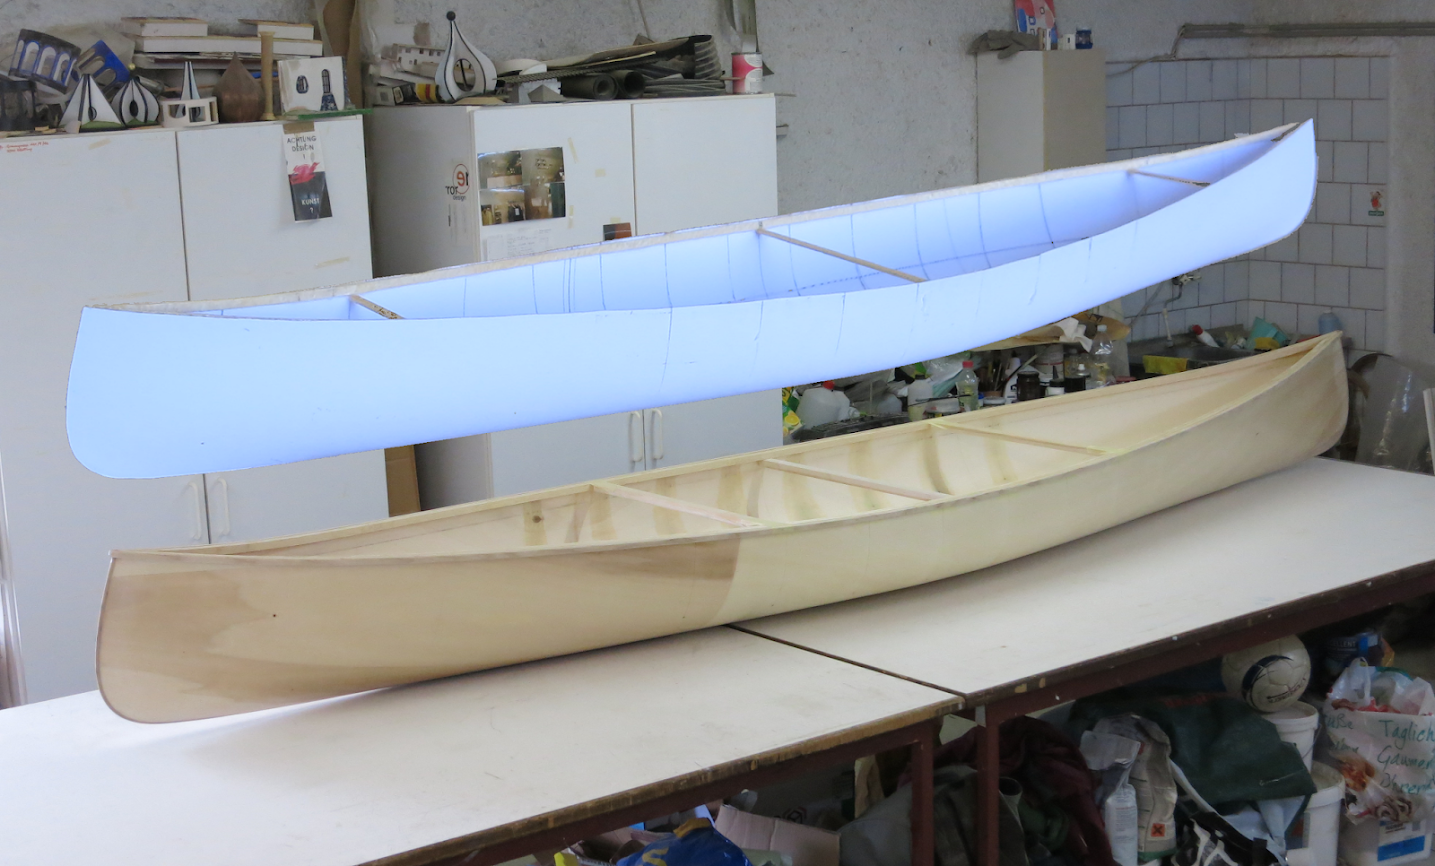 Gorewood One Sheet Canoe